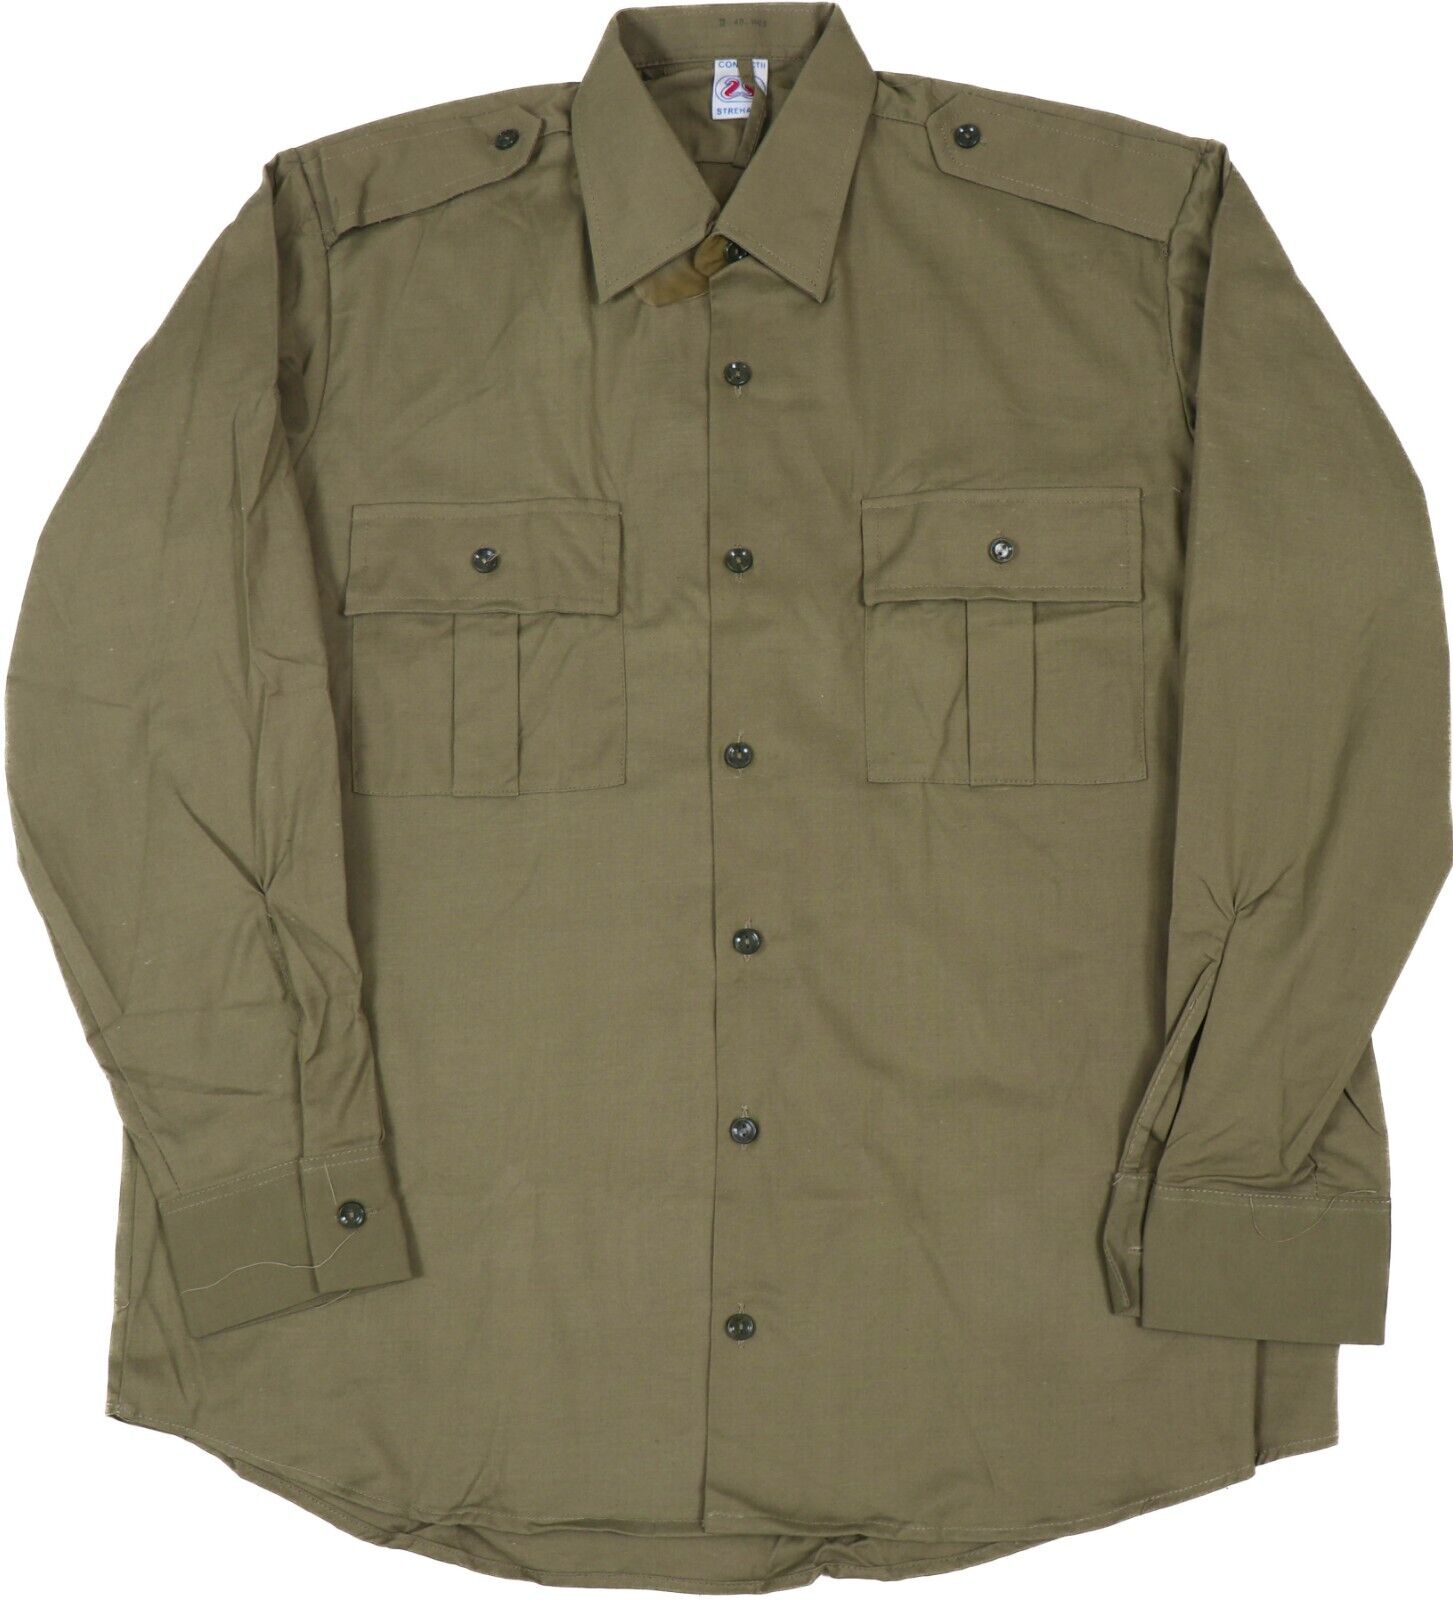 Large 40-42 Romanian Army Olive Camo Field Jacket Shirt Military M90 M93 M94